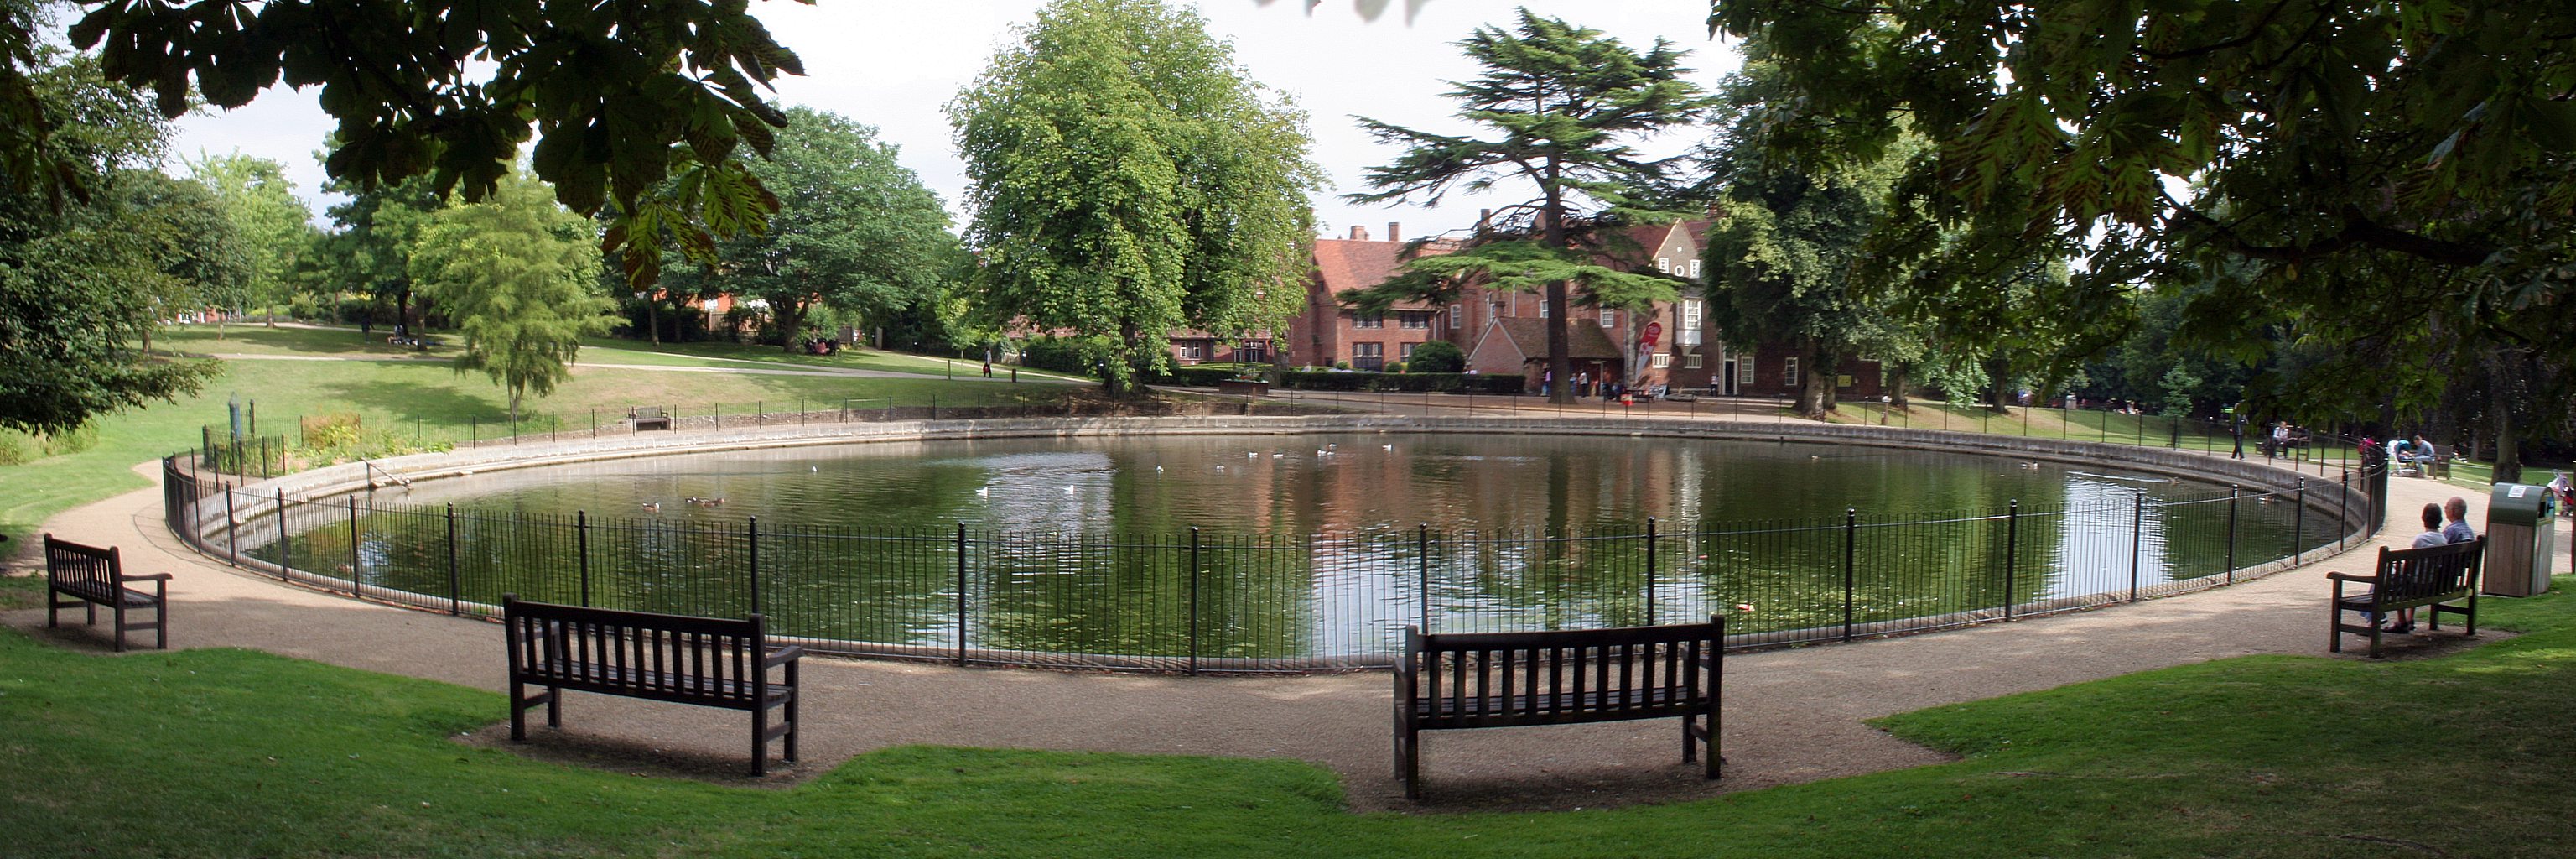 File:Cmglee Ipswich Christchurch Park round pond.jpg - Wikimedia Commons